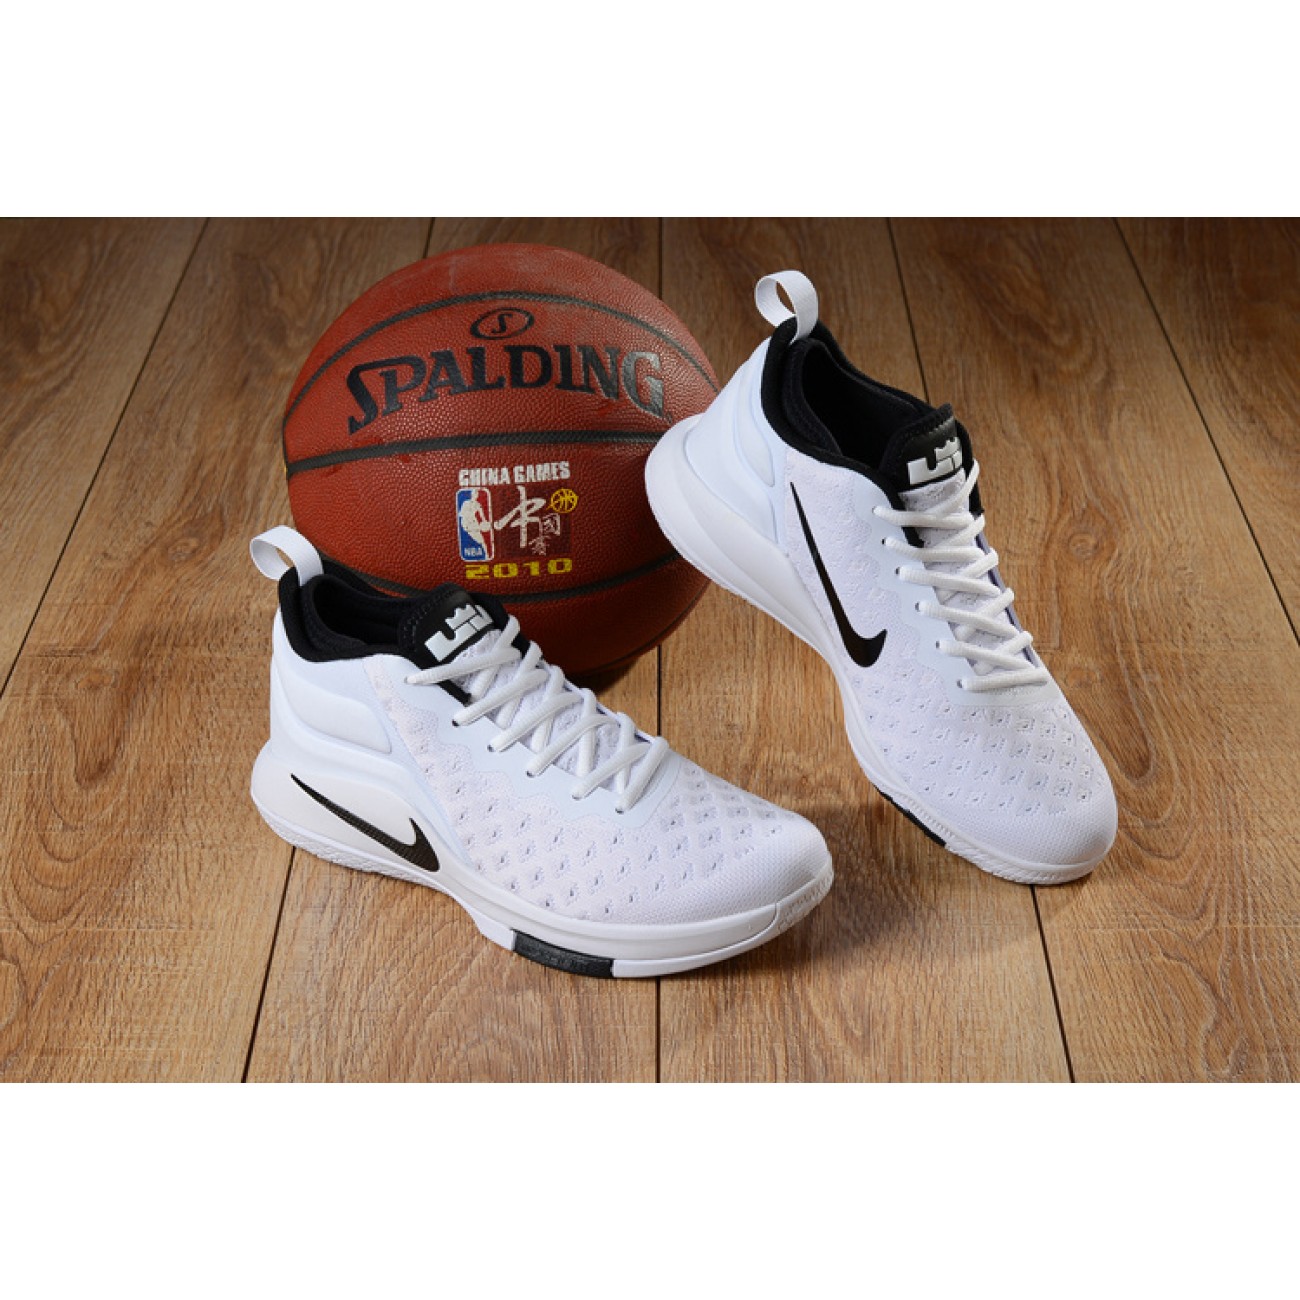 Lebron Witness 2 Flyknit Basketball Shoes "Oreo" White/Black